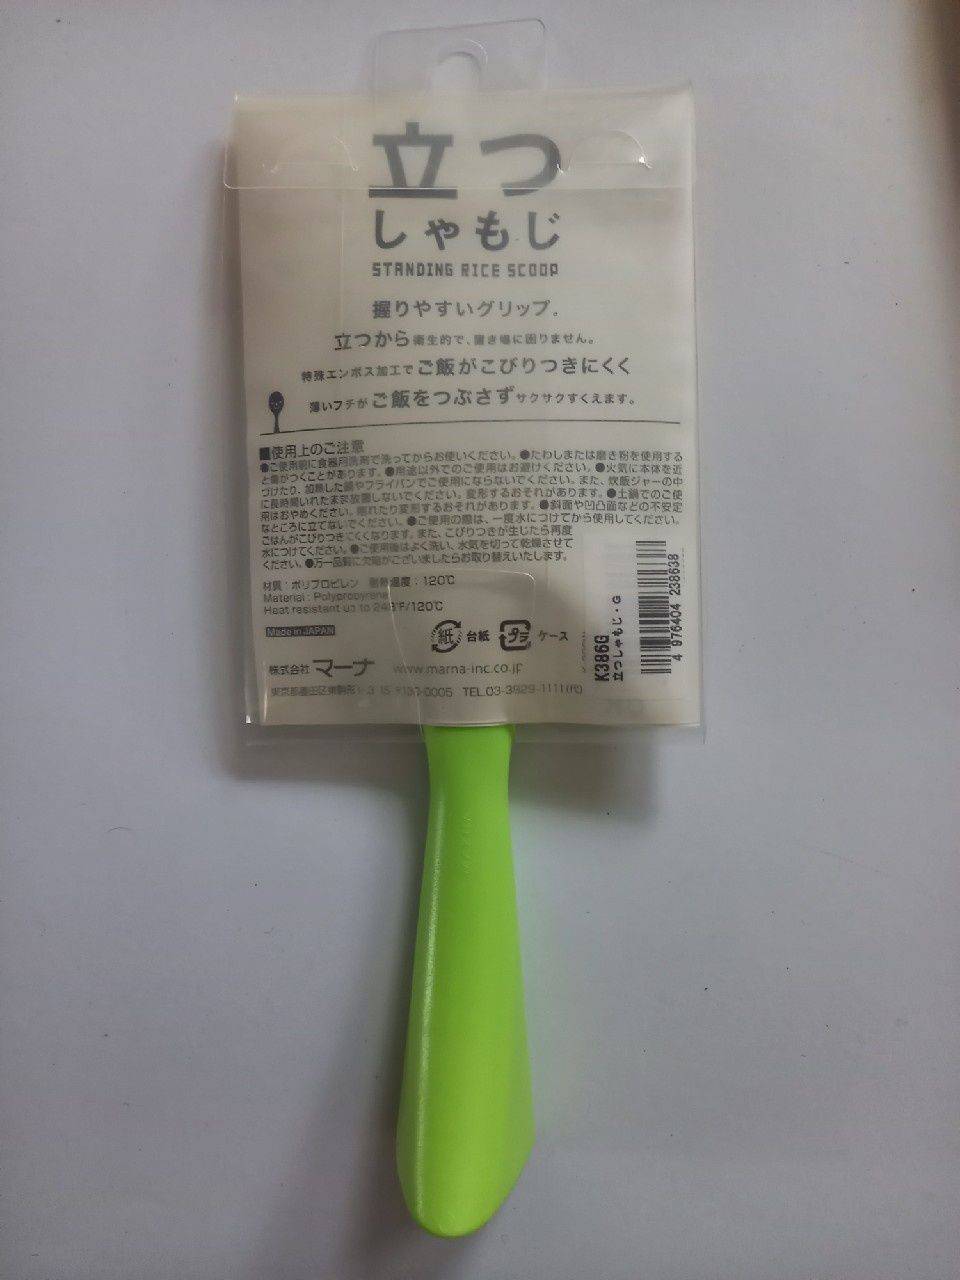 Designerska łyżka do ryżu Made in Japan